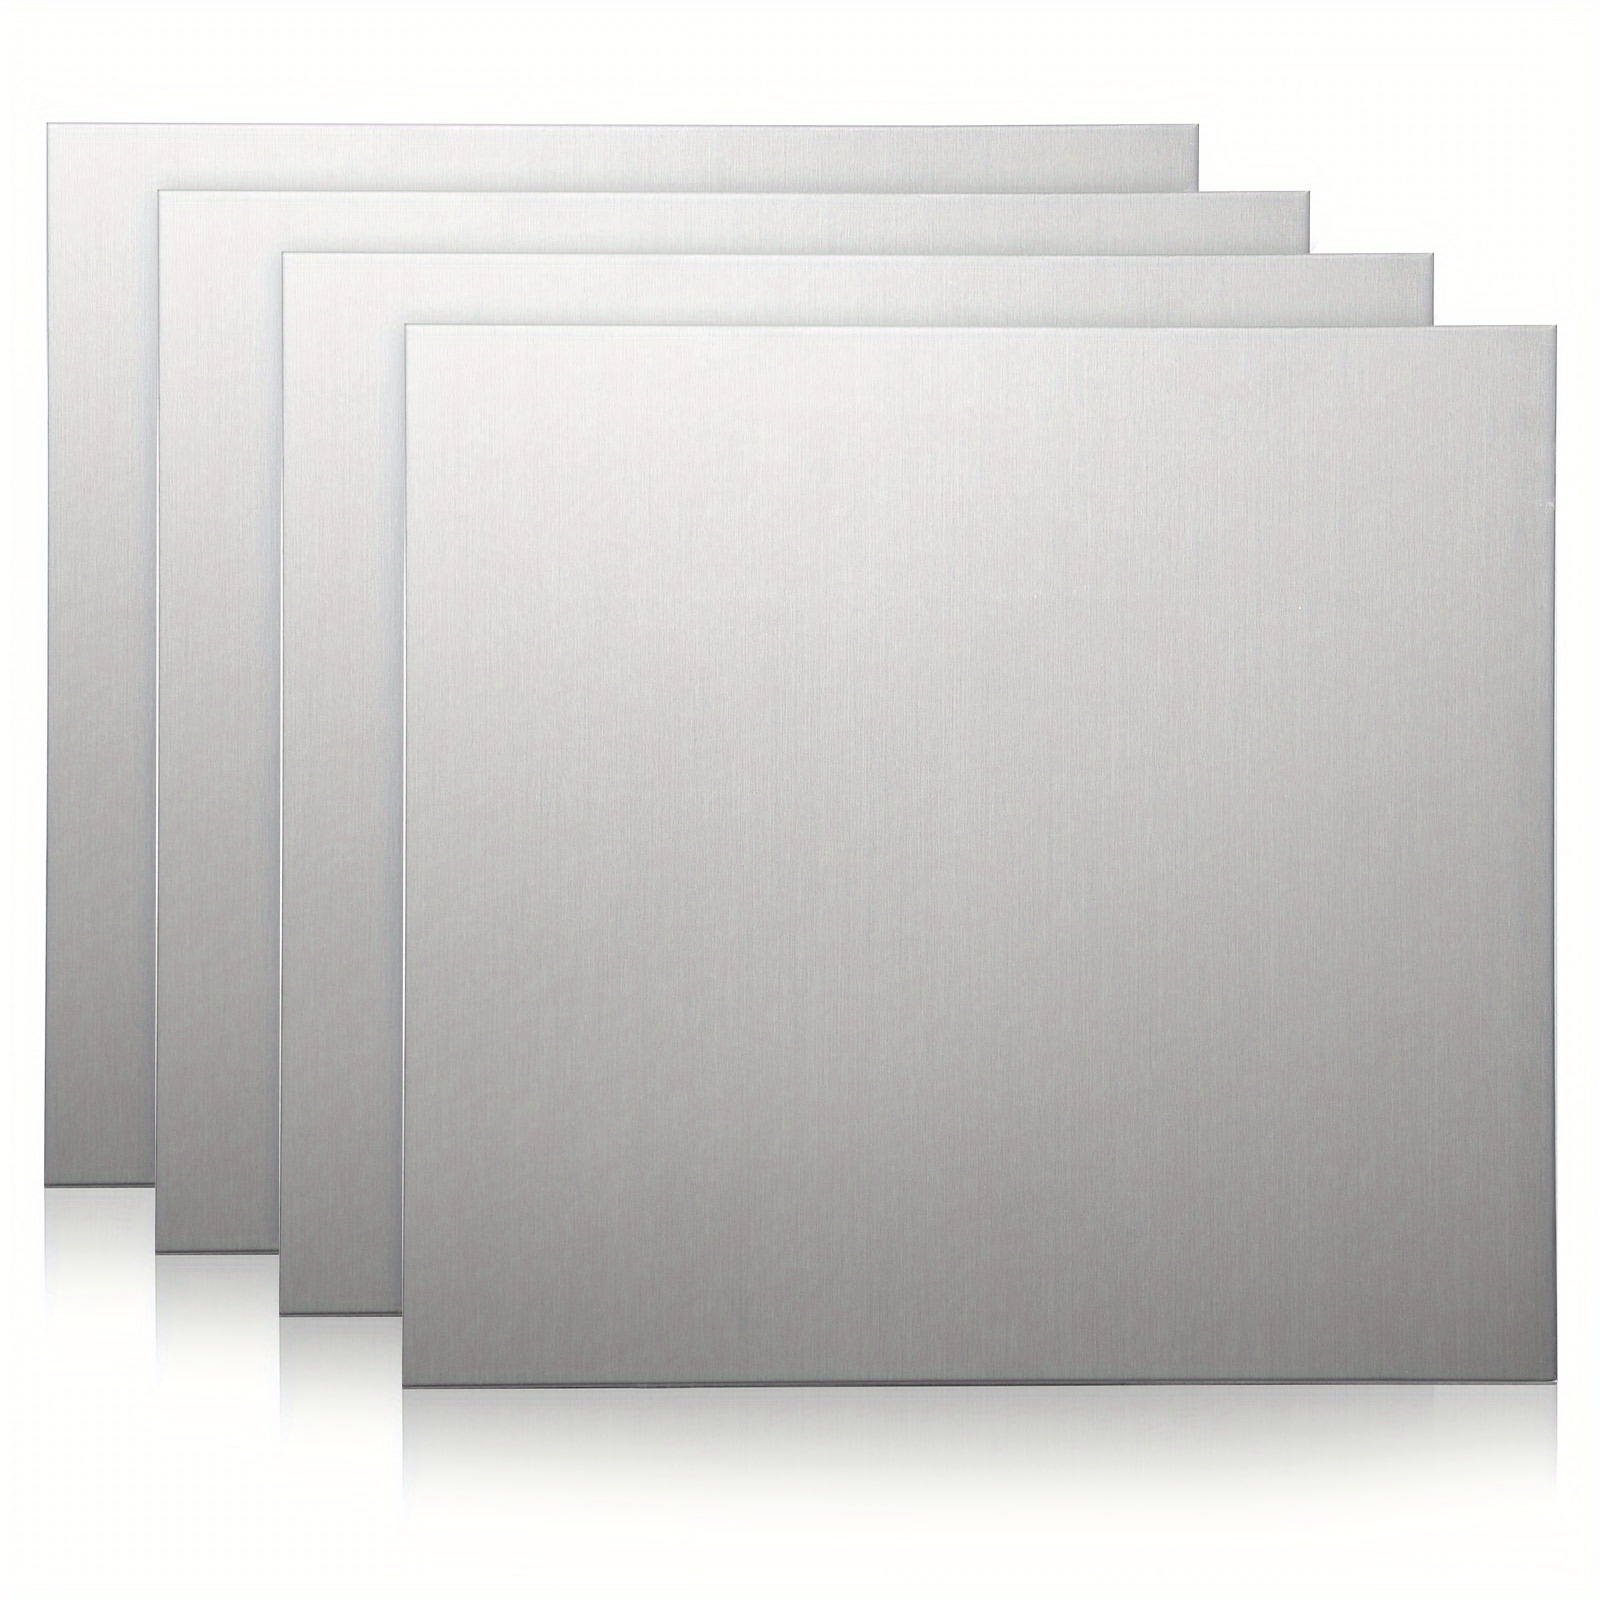 Paquete de 6 chapas de aluminio 5052 de 12 x 12 x 1/64 pulgadas (0.02  pulgadas), panel de placa de aluminio liso plano delgado cubierto con  película